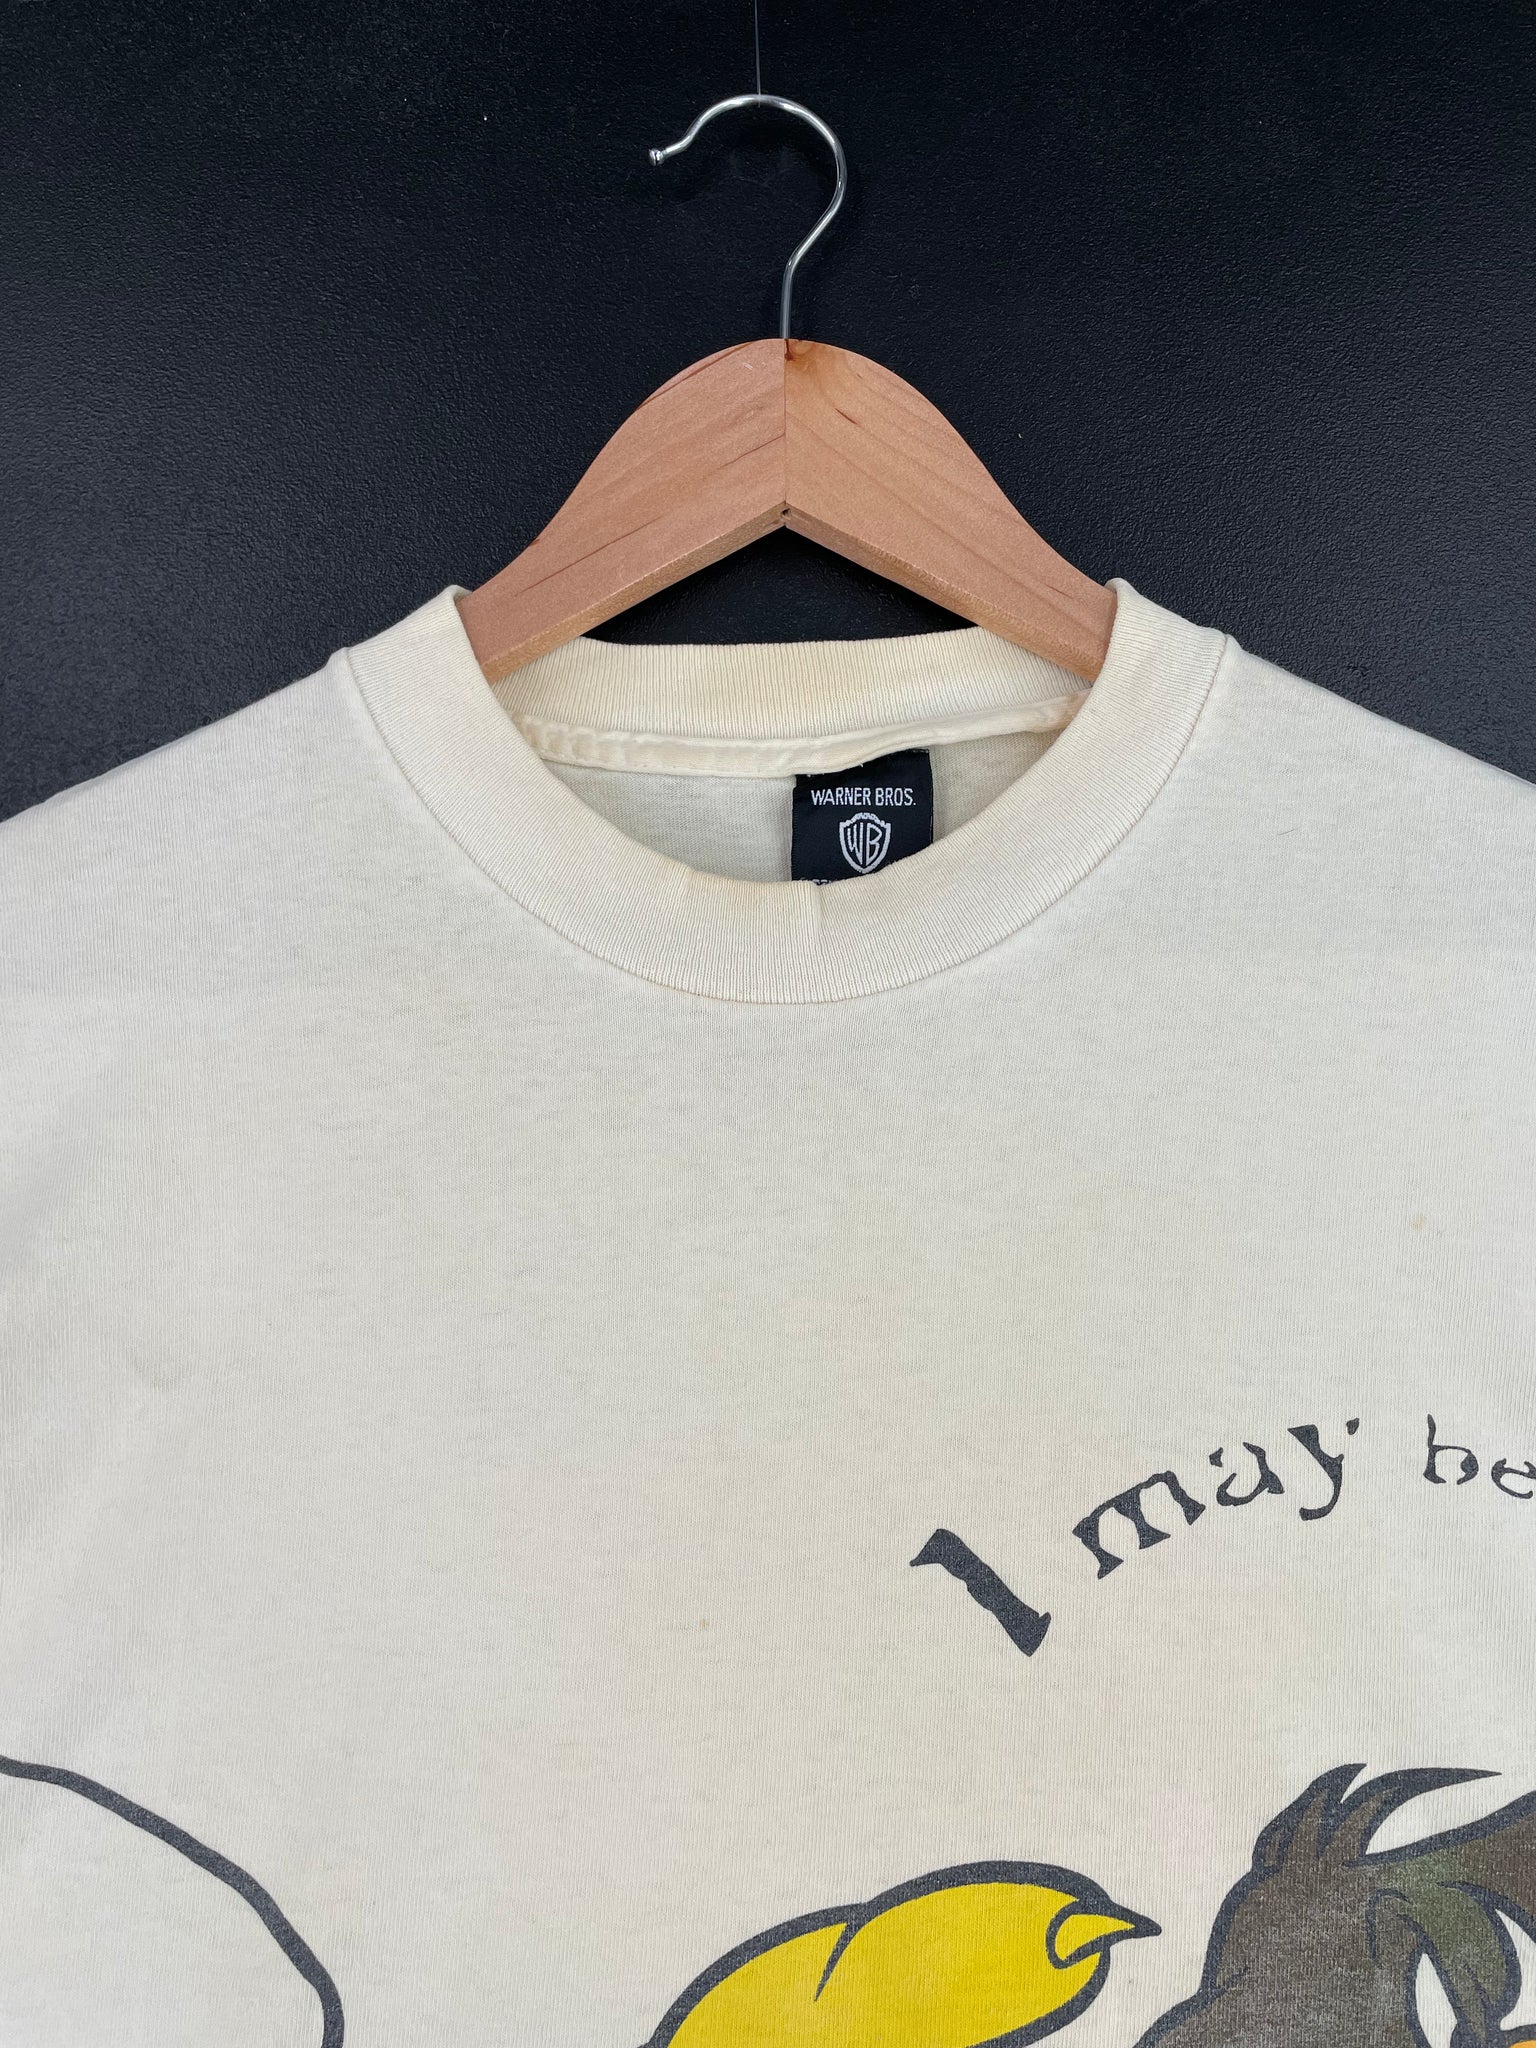 1996 LOONEY TUNES FOGHORN LEGHORN AND HENERY HAWK Size No Tag (Approx.XL) Vintage T-shirts / Y587